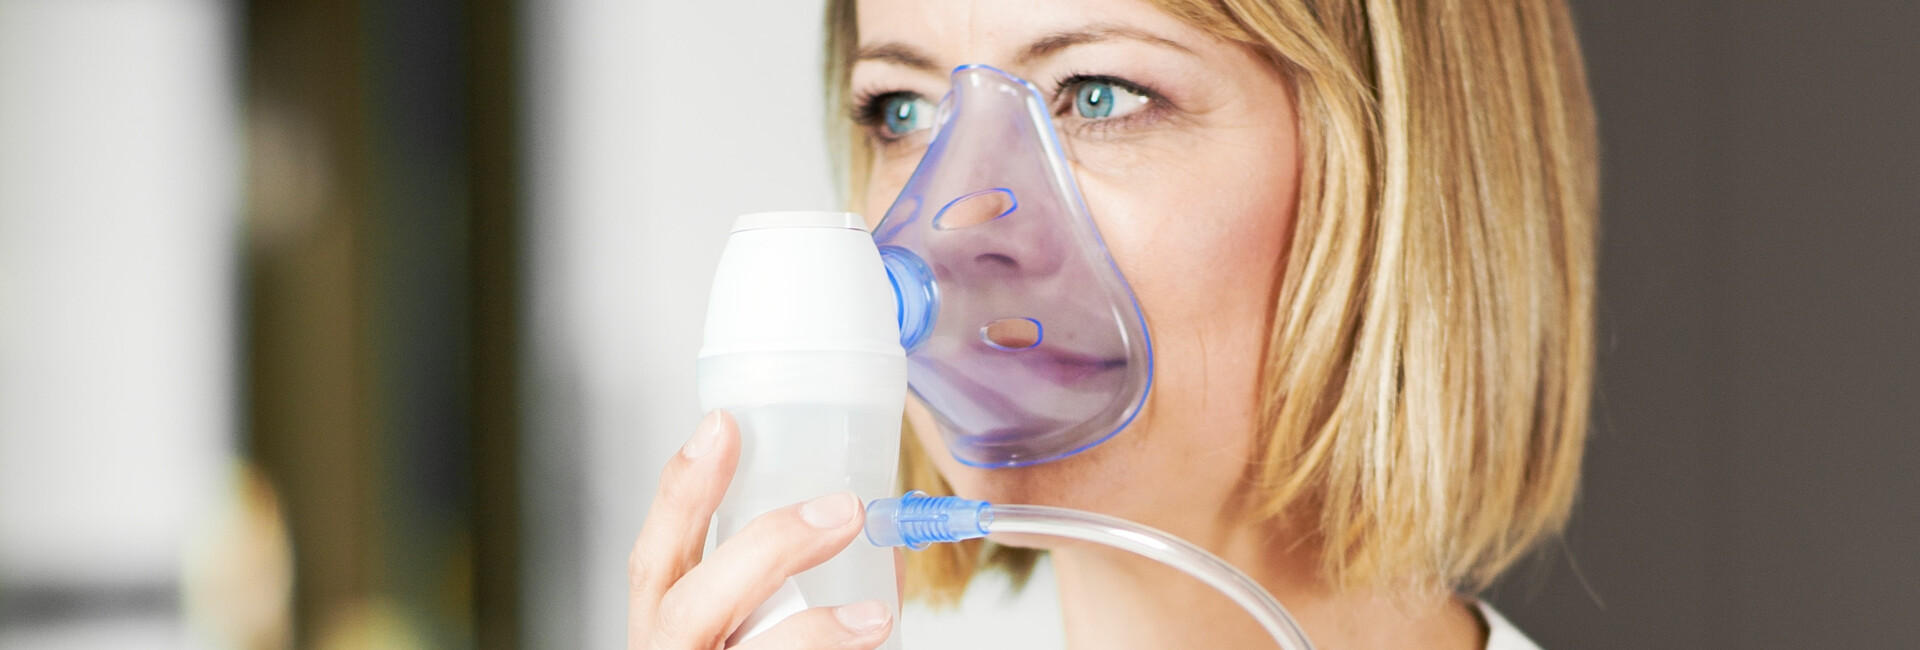 microlife-respiratory-care-nebuliser-mask